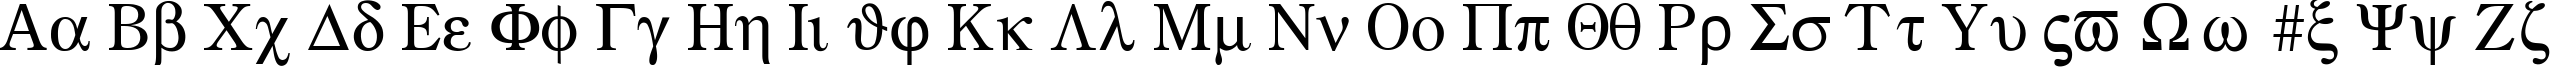 Пример написания английского алфавита шрифтом GreekMathSymbols Plain:001.003